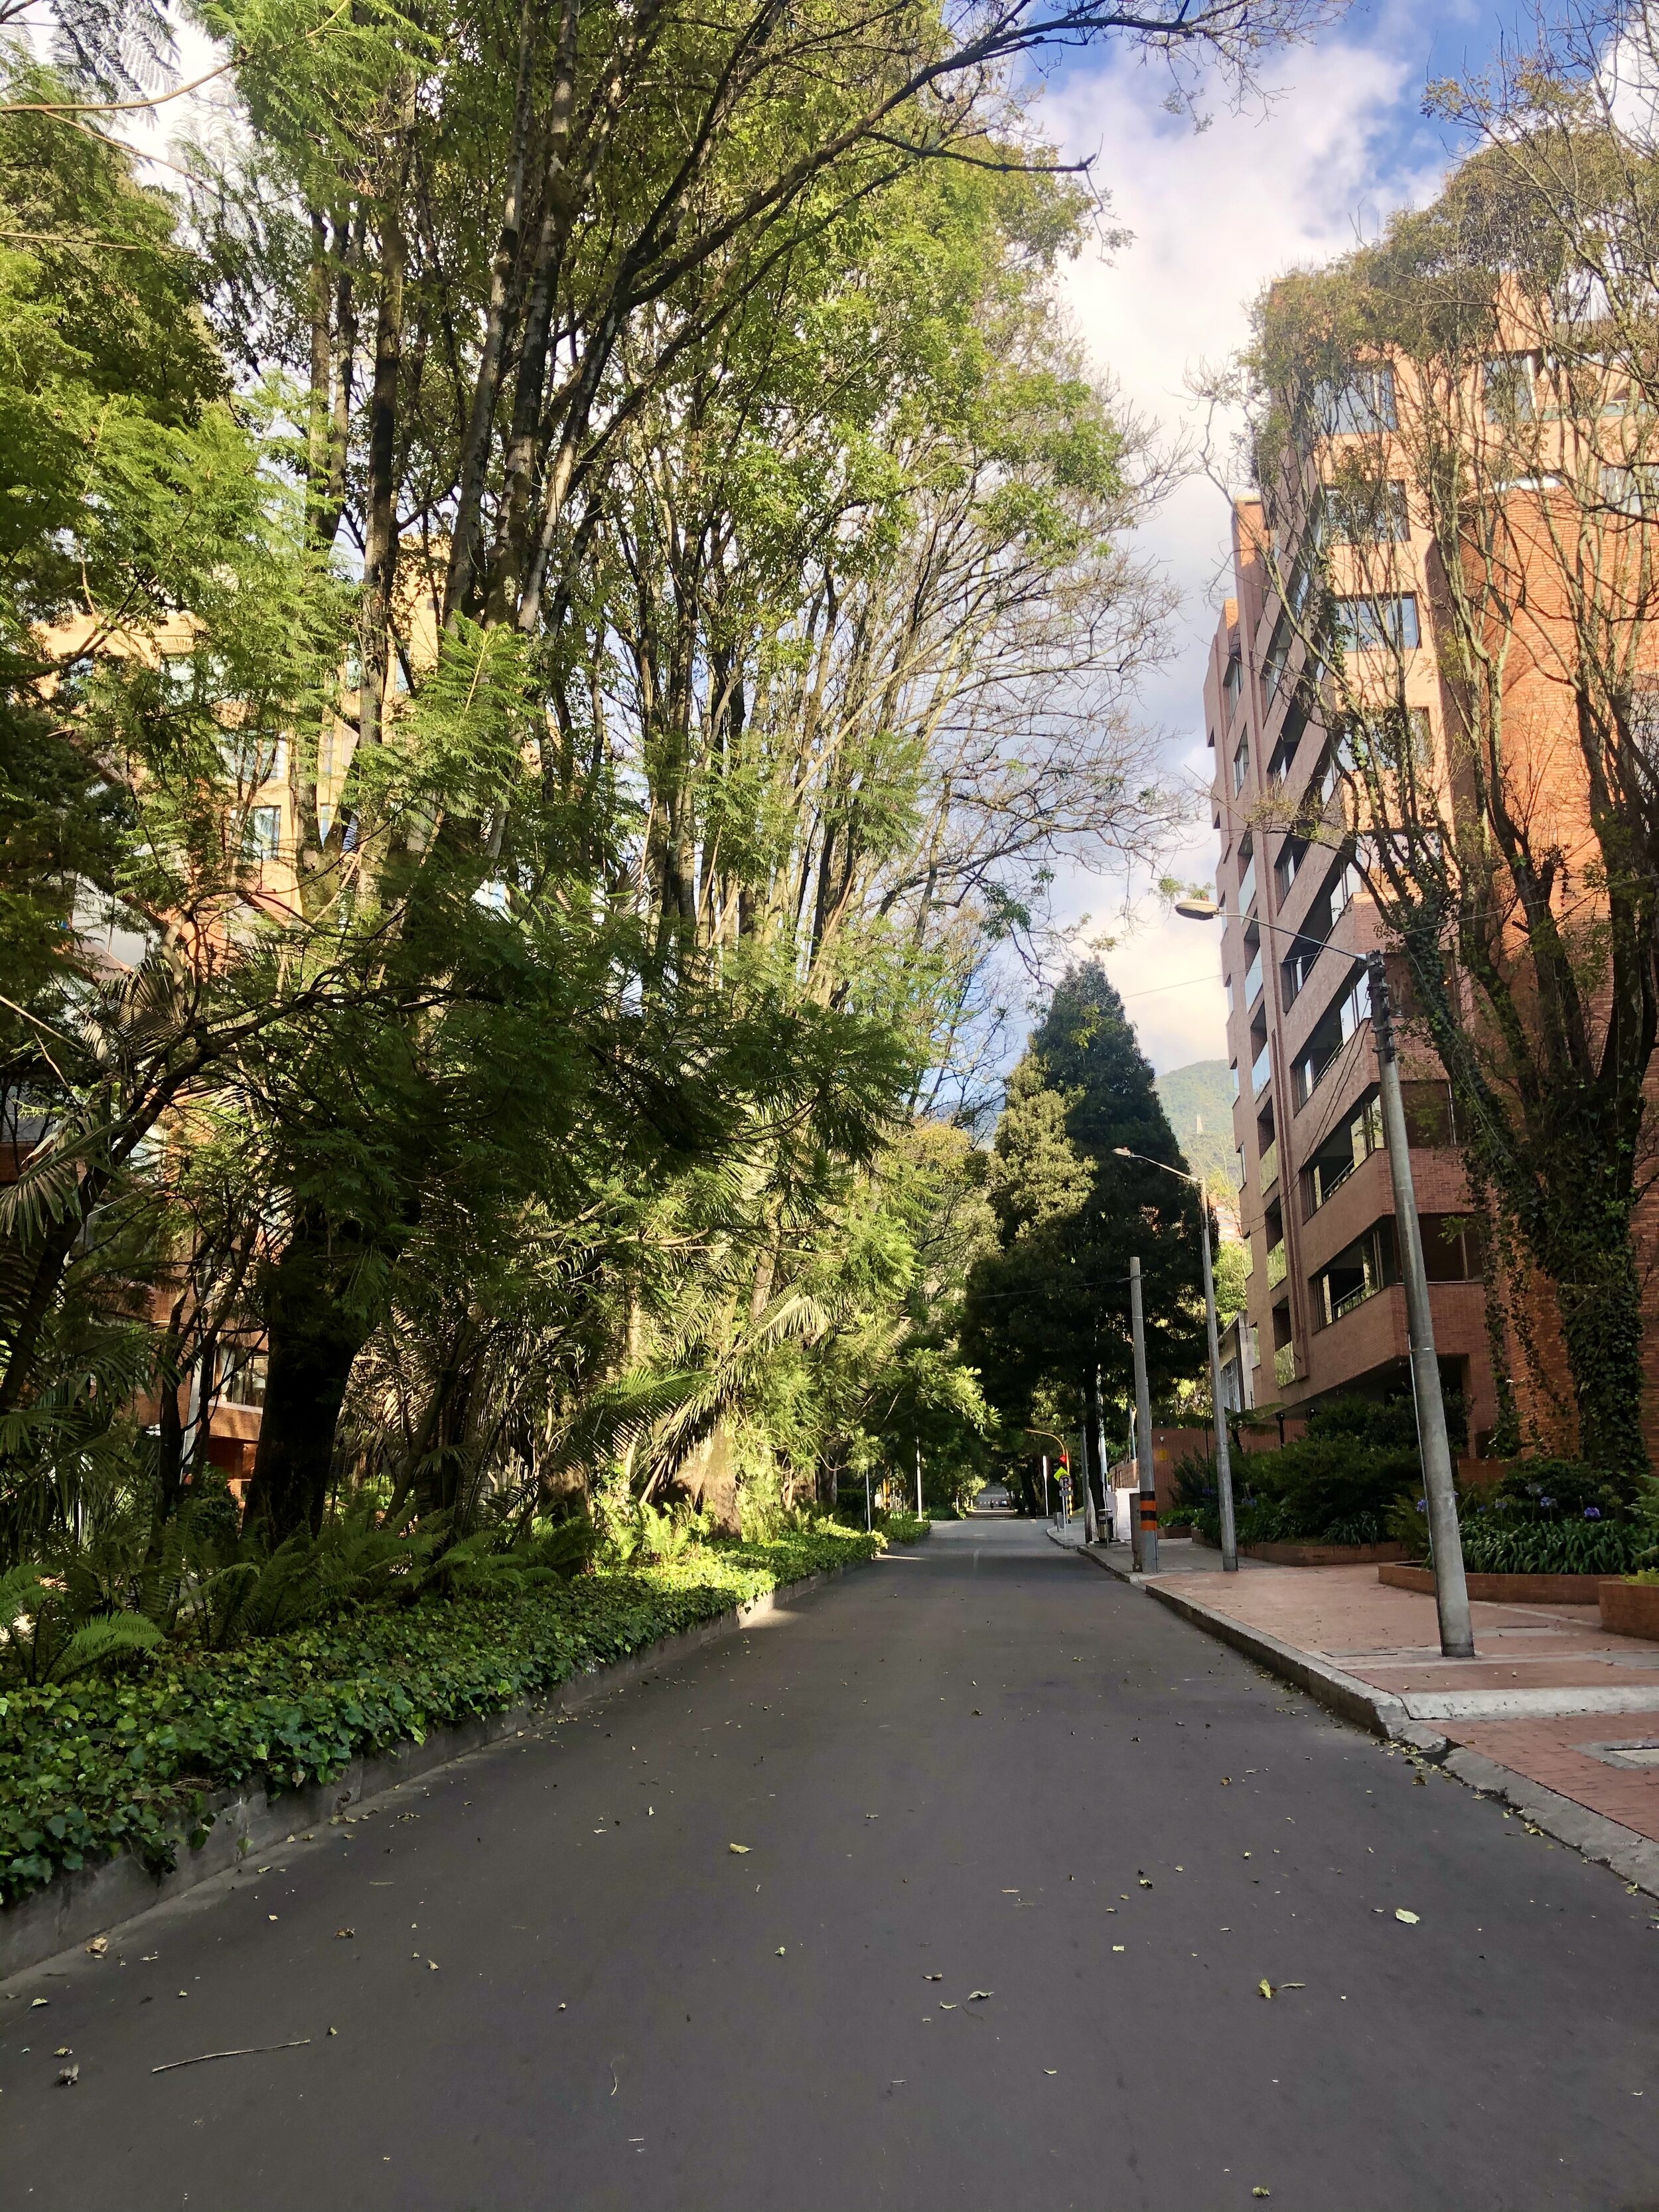  Beautifully serene streets of Bogota. 